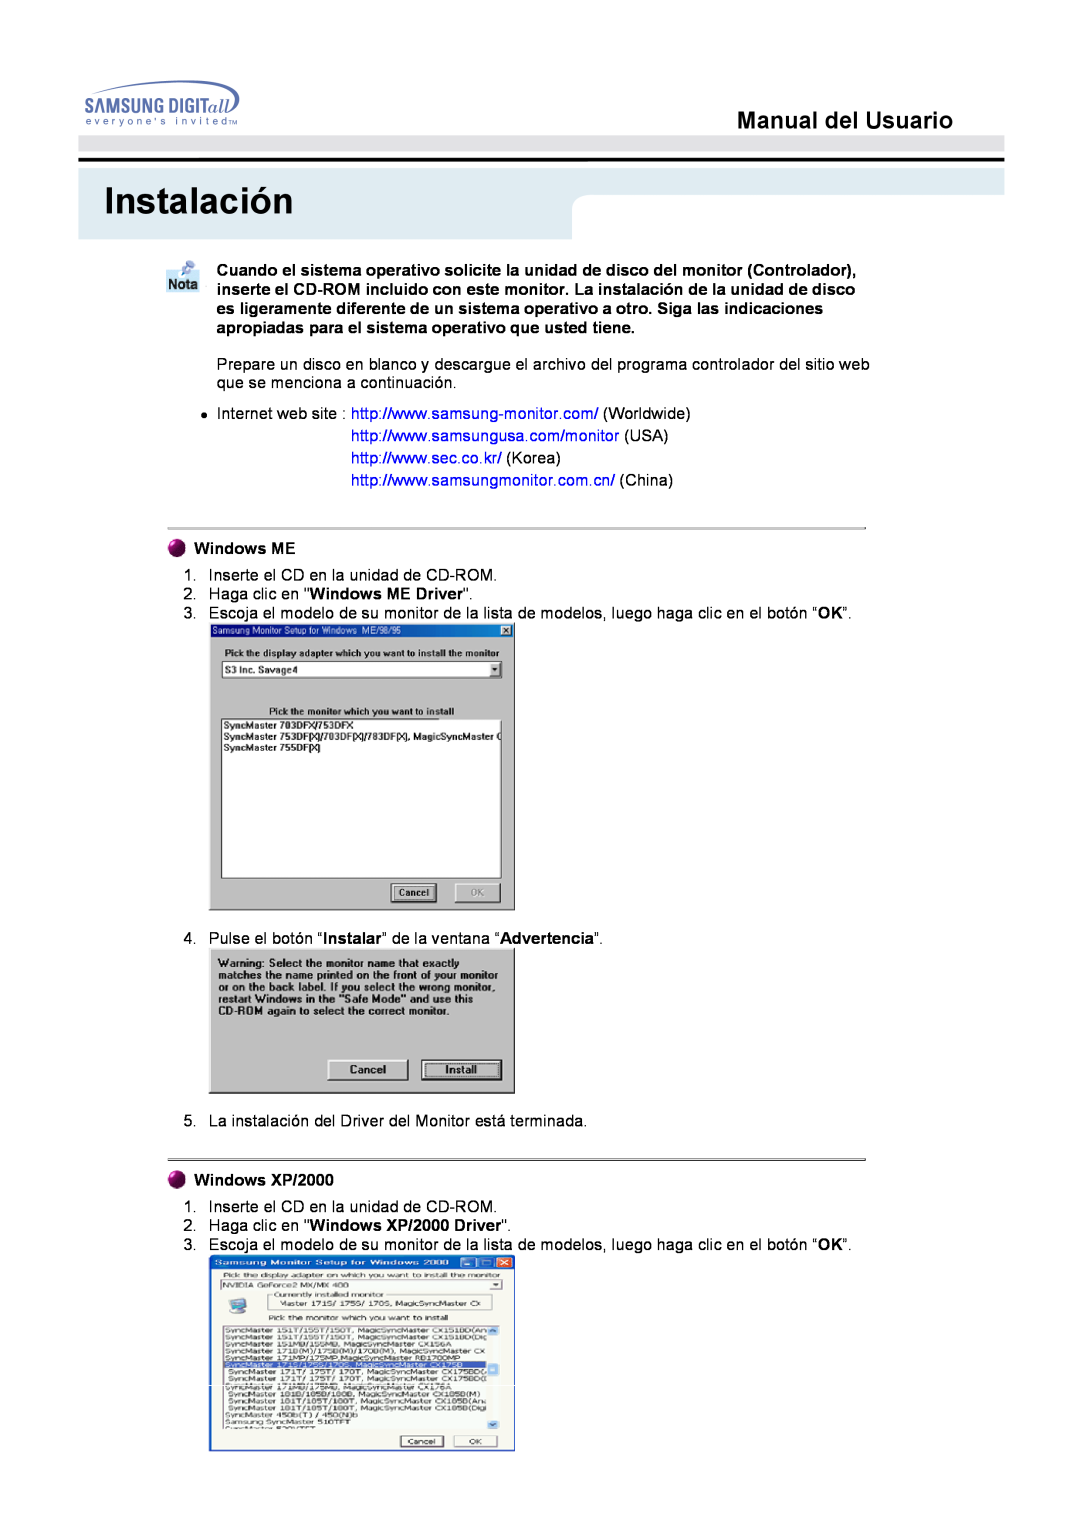 Samsung MO17ESDSZ/EDC, MO17ESZSZ/EDC Instalación, Manual del Usuario, Haga clic en Windows ME Driver, Windows XP/2000 